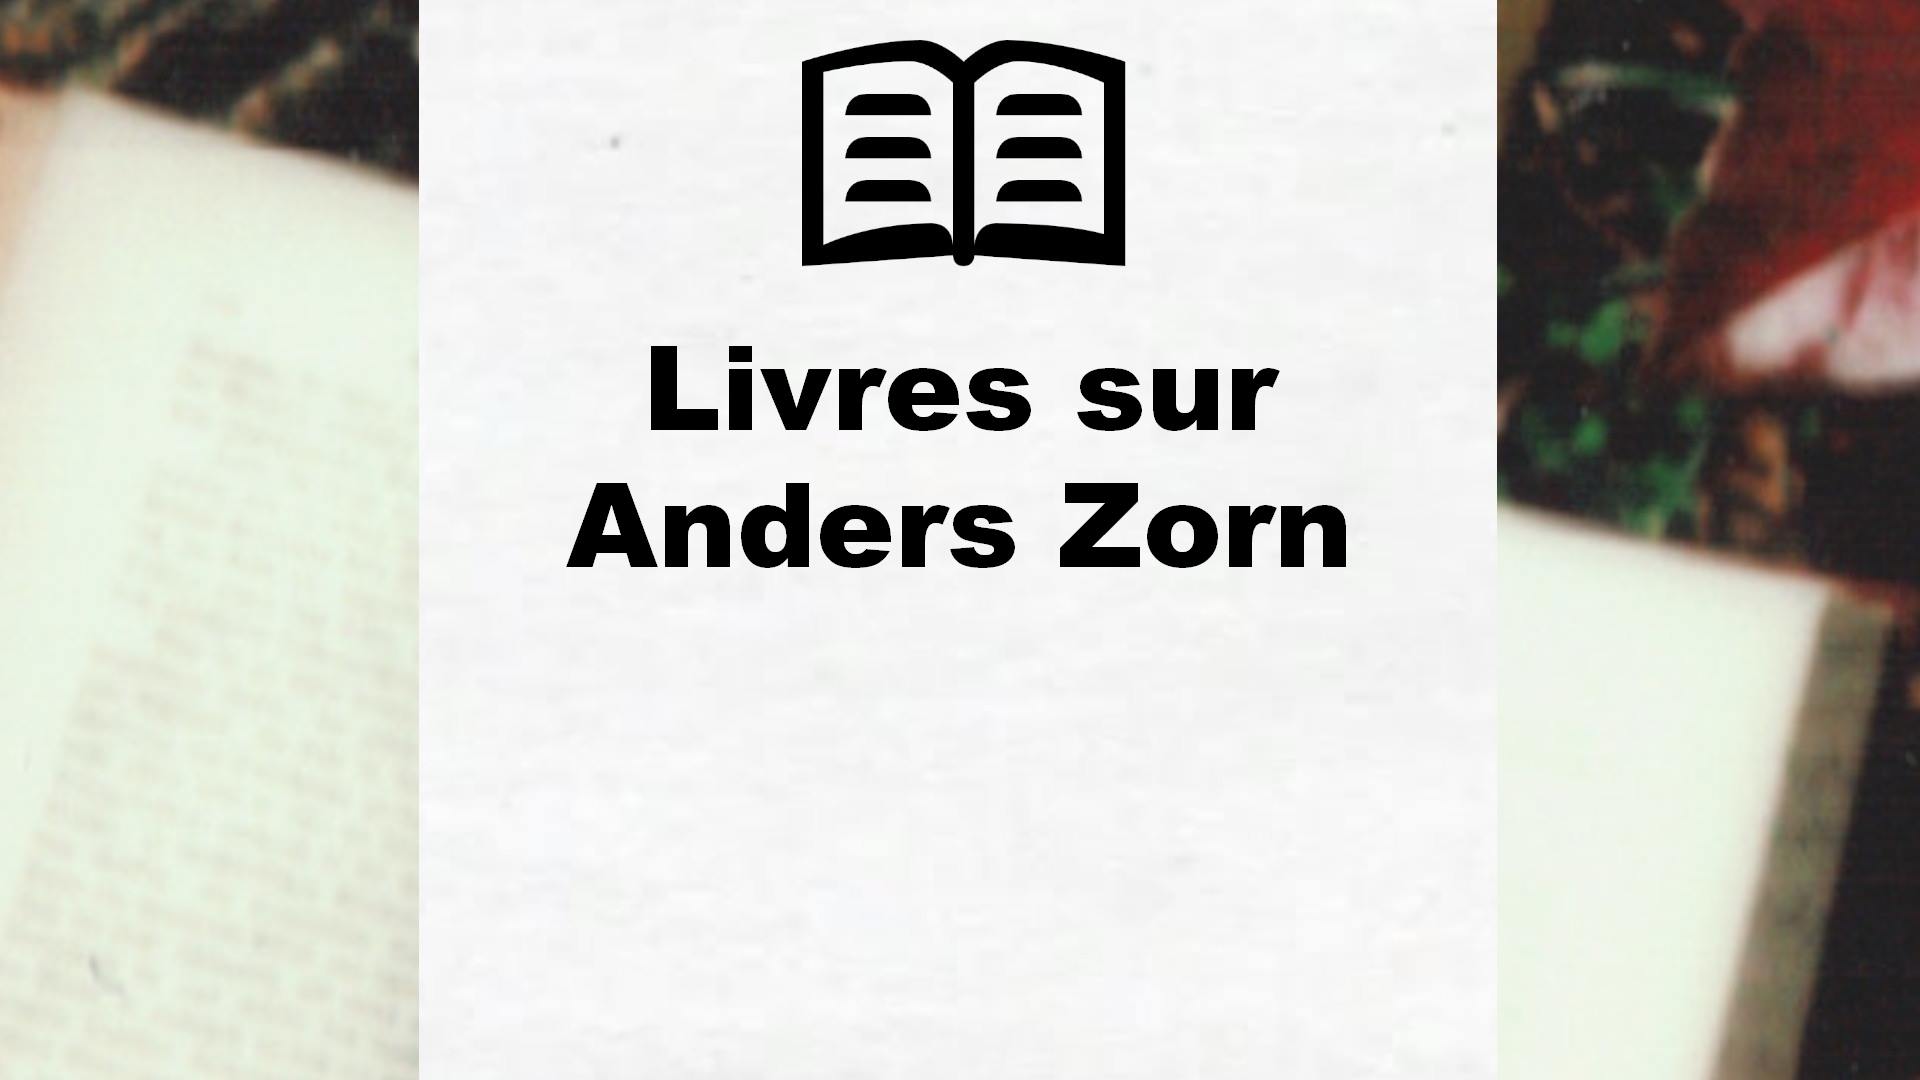 Livres sur Anders Zorn